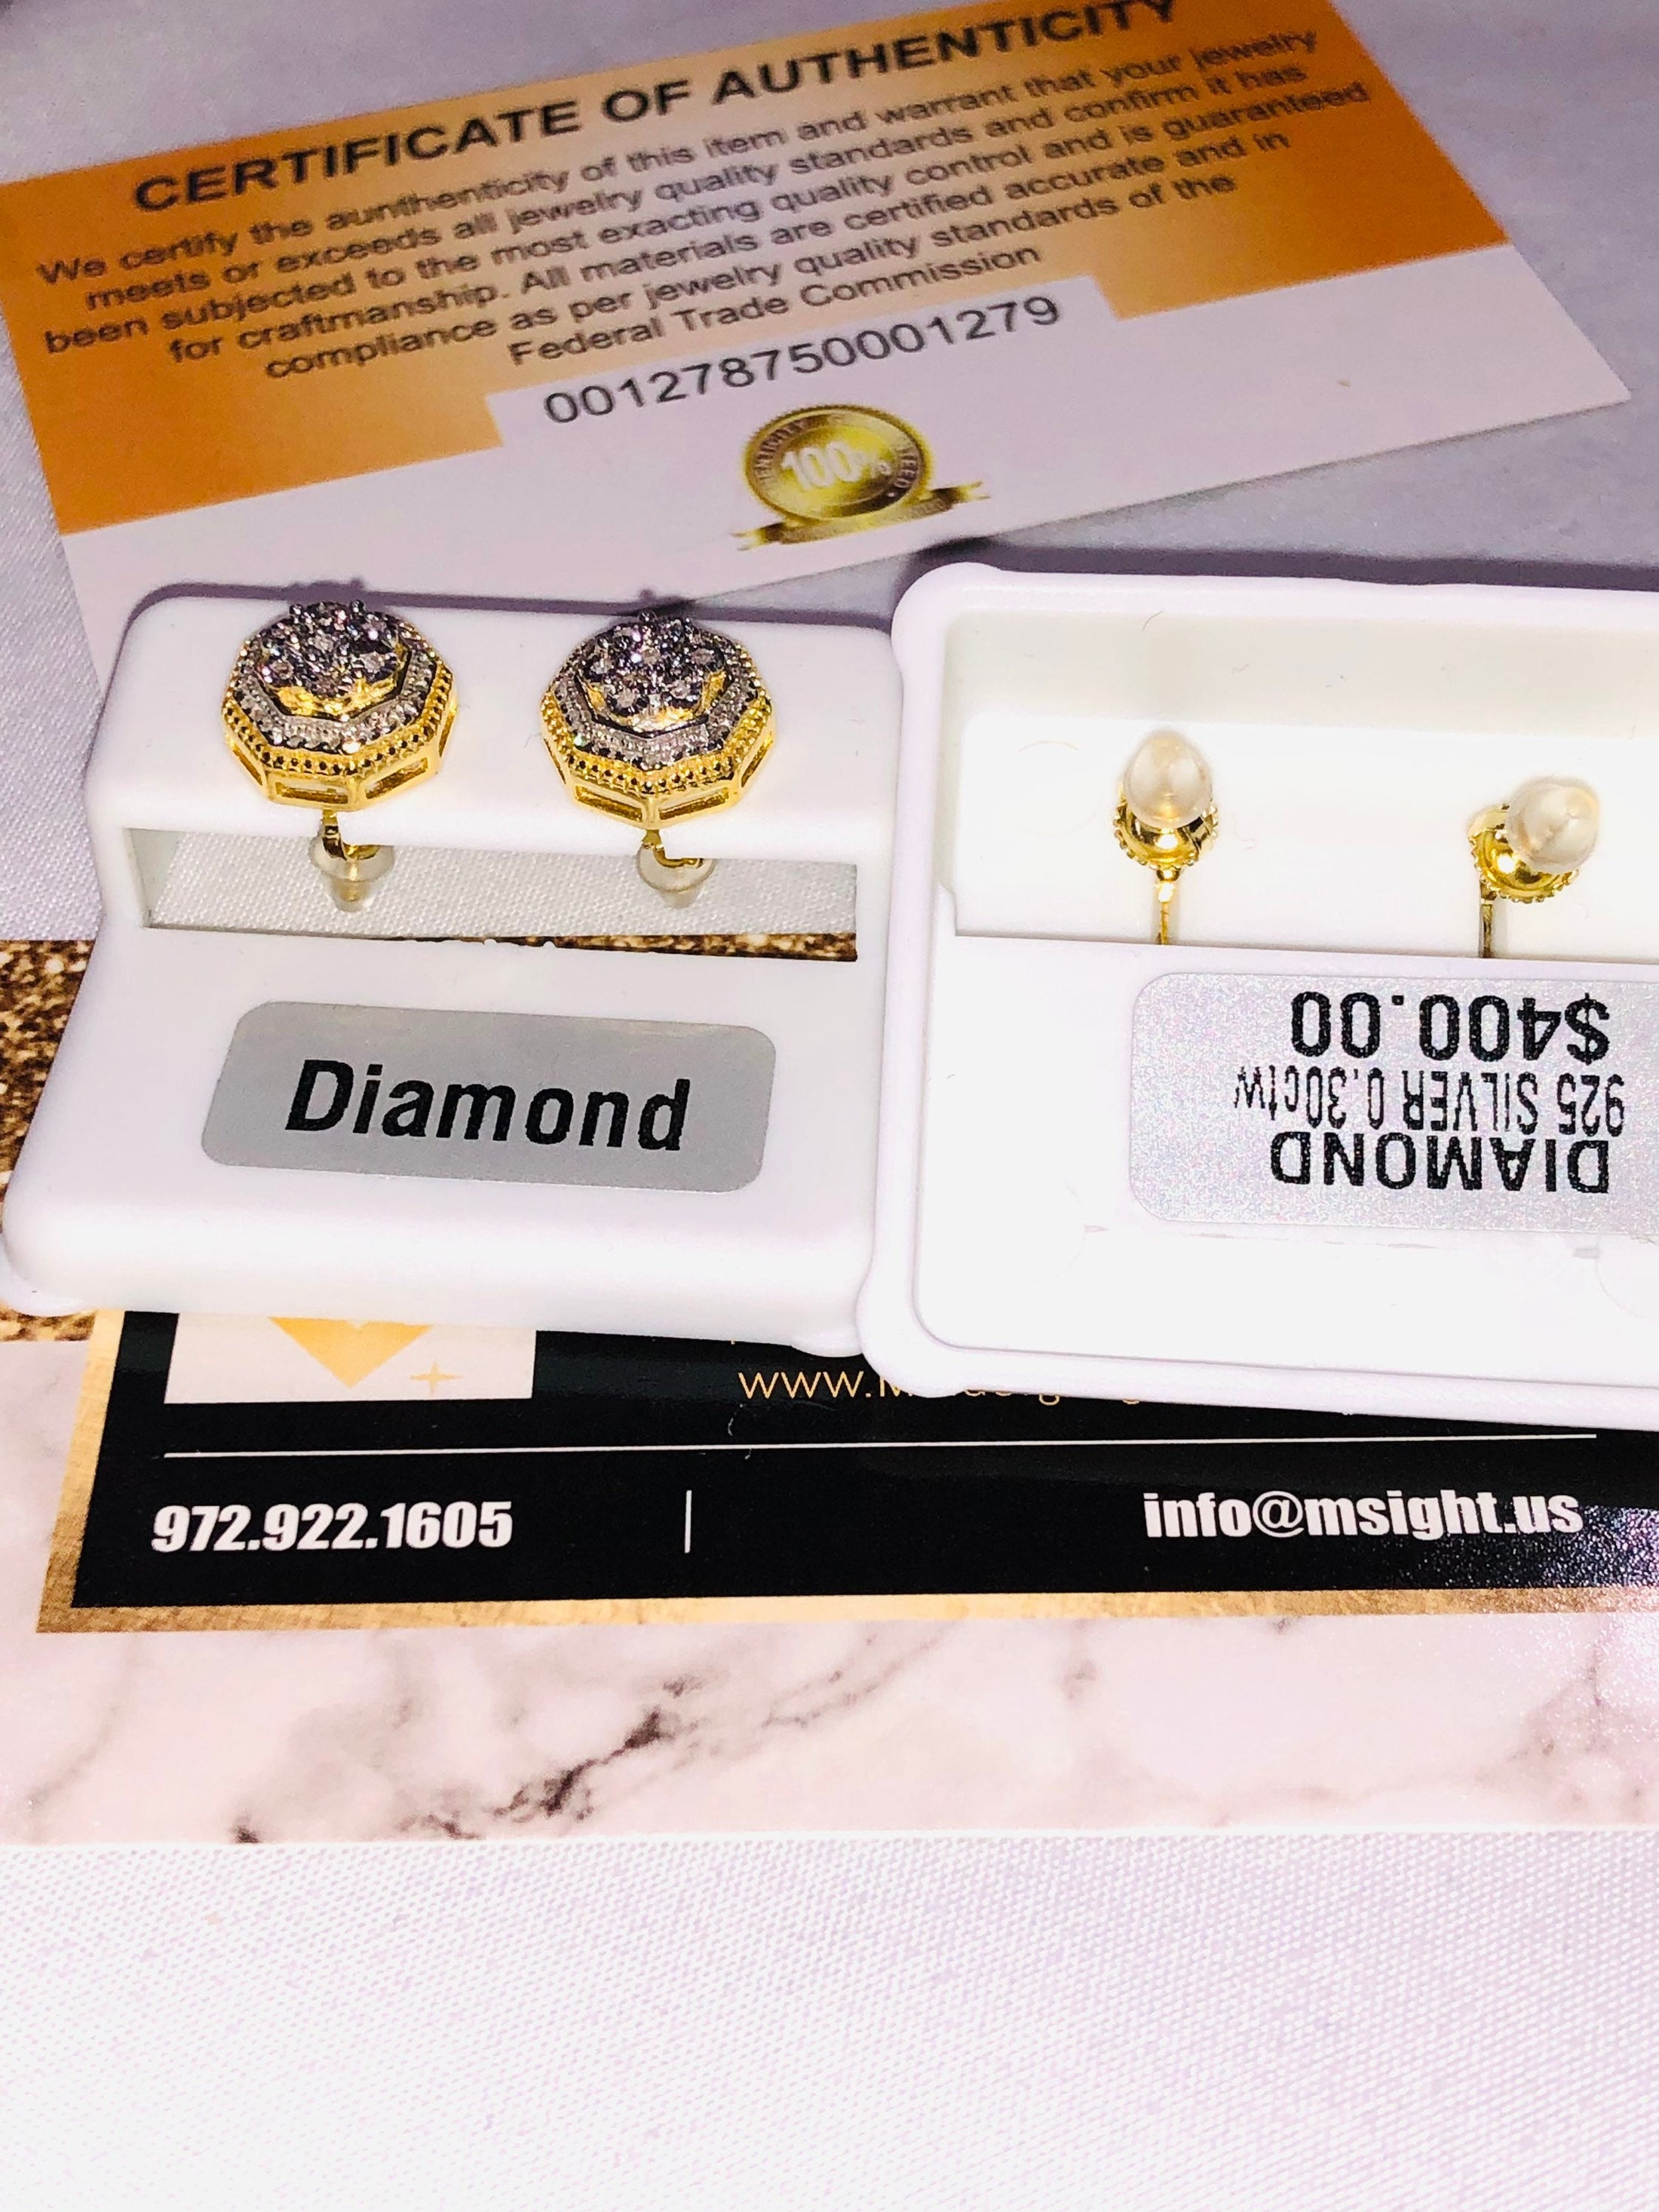 10k yellow gold vermeil real genuine diamond screwback earrings, beautiful unique custom designed studs, best gift for men or women, sale